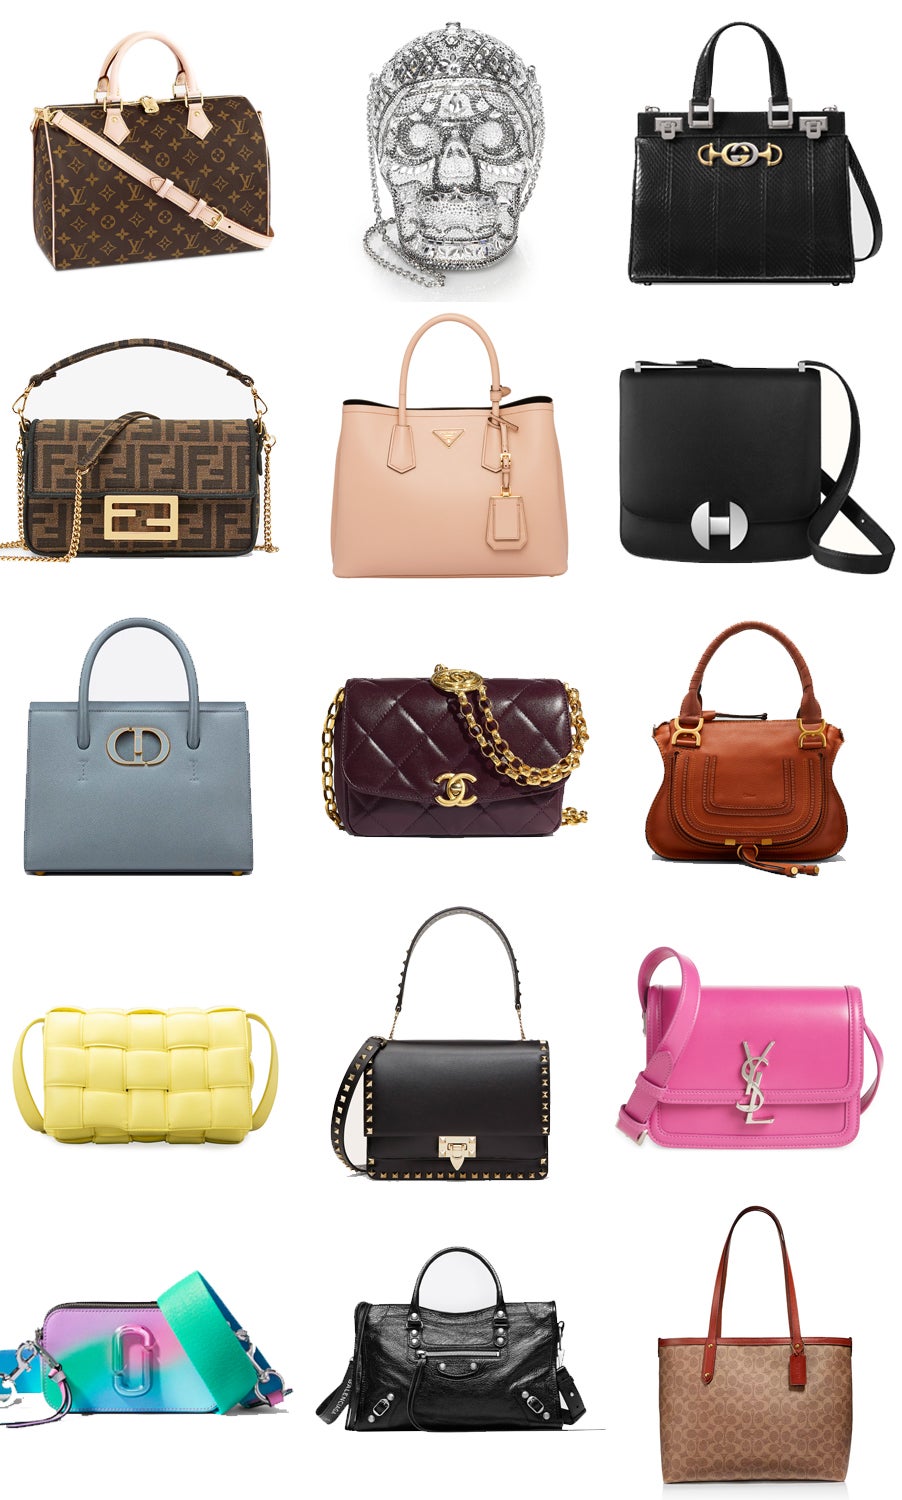 Men go for luxury when choosing handbags: survey